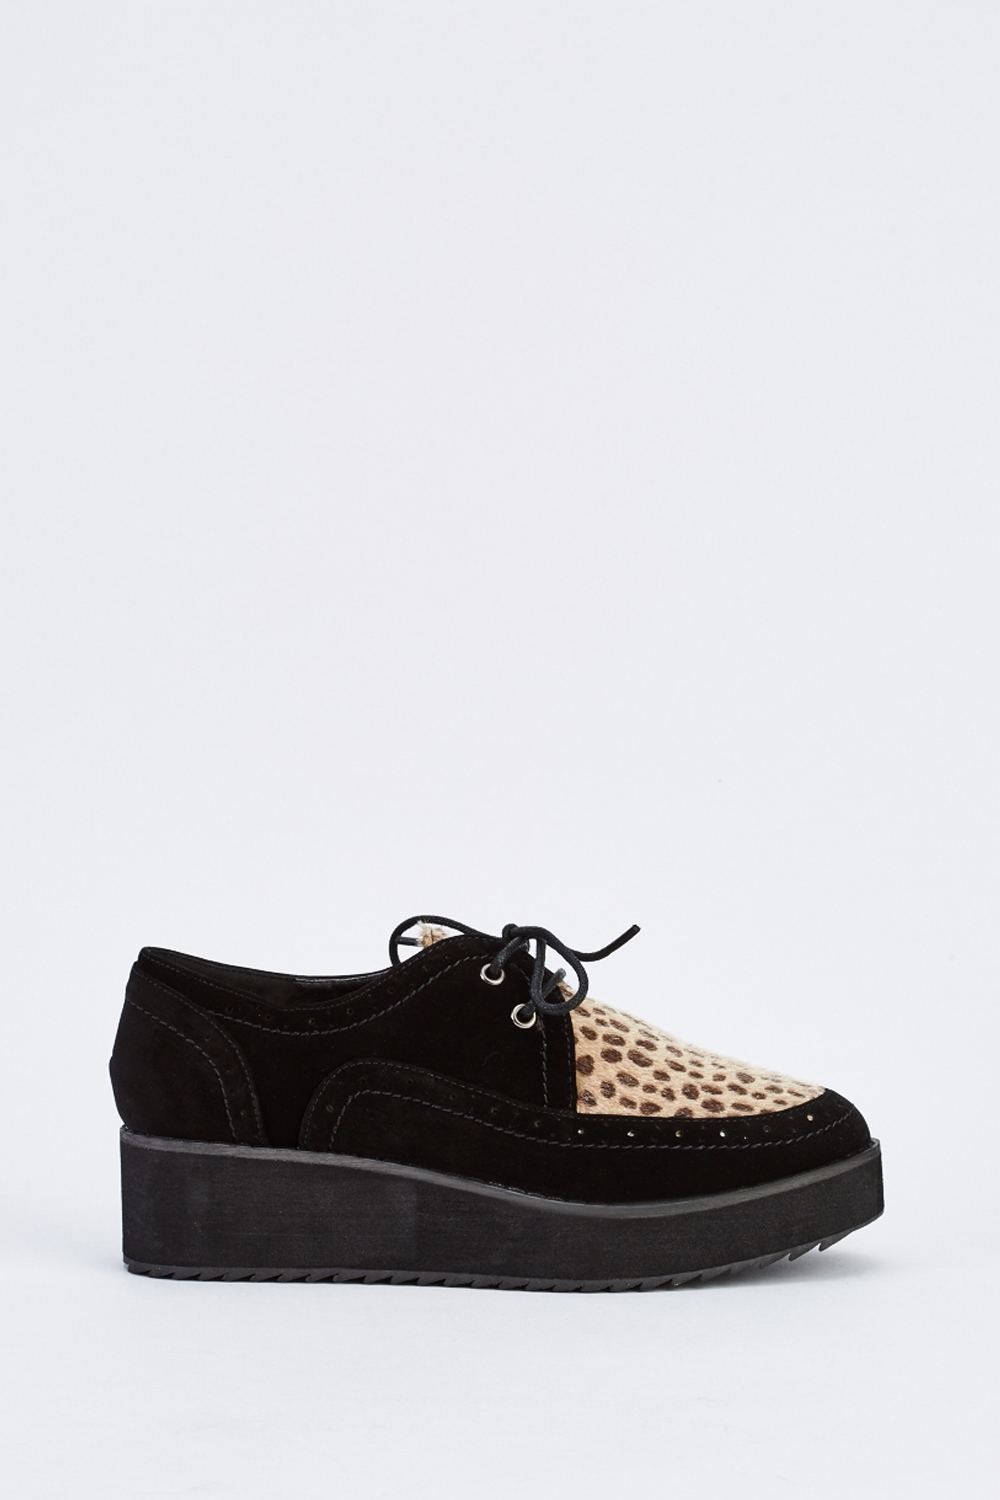 Leopard Print Creeper Shoes - Just $7